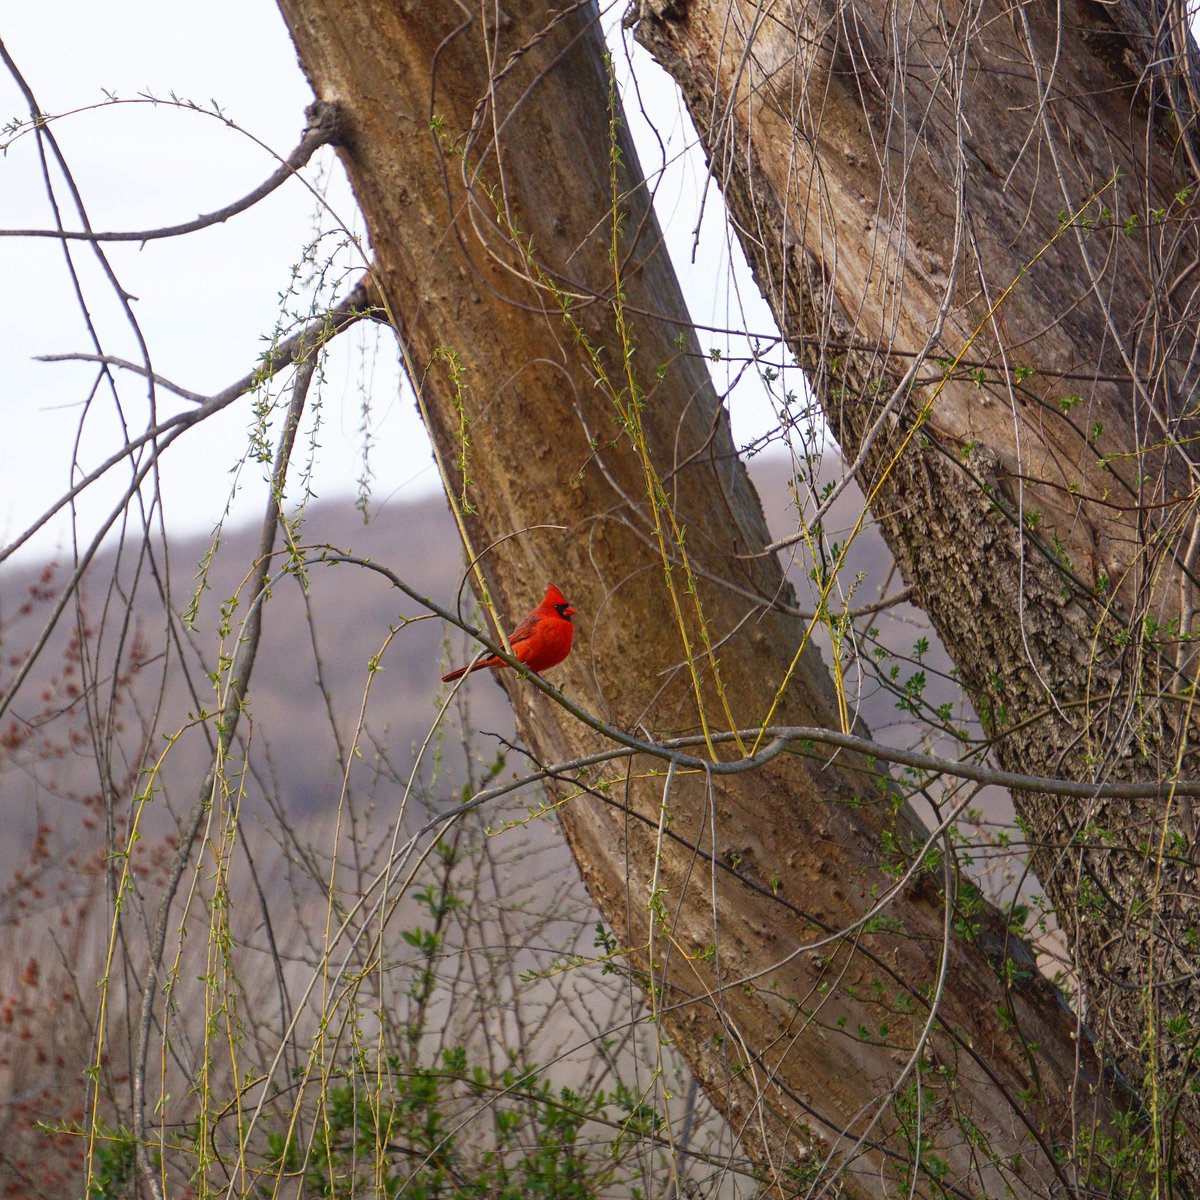 When a cardinal appears, it's a sign from 𝗛𝗲𝗮𝘃𝗲𝗻 a loved one is near.

#KarissasKaptures #Cardinal #CardinalsOfInstagram #CardinalBird #VisitFromHeaven #Angel #Bird #BirdsOfInstagram #BirdsAndBlooms #BirdsAreBeautiful #Cardinals #SpruceRunRecreation #ClintonNJ #SpringIsHere